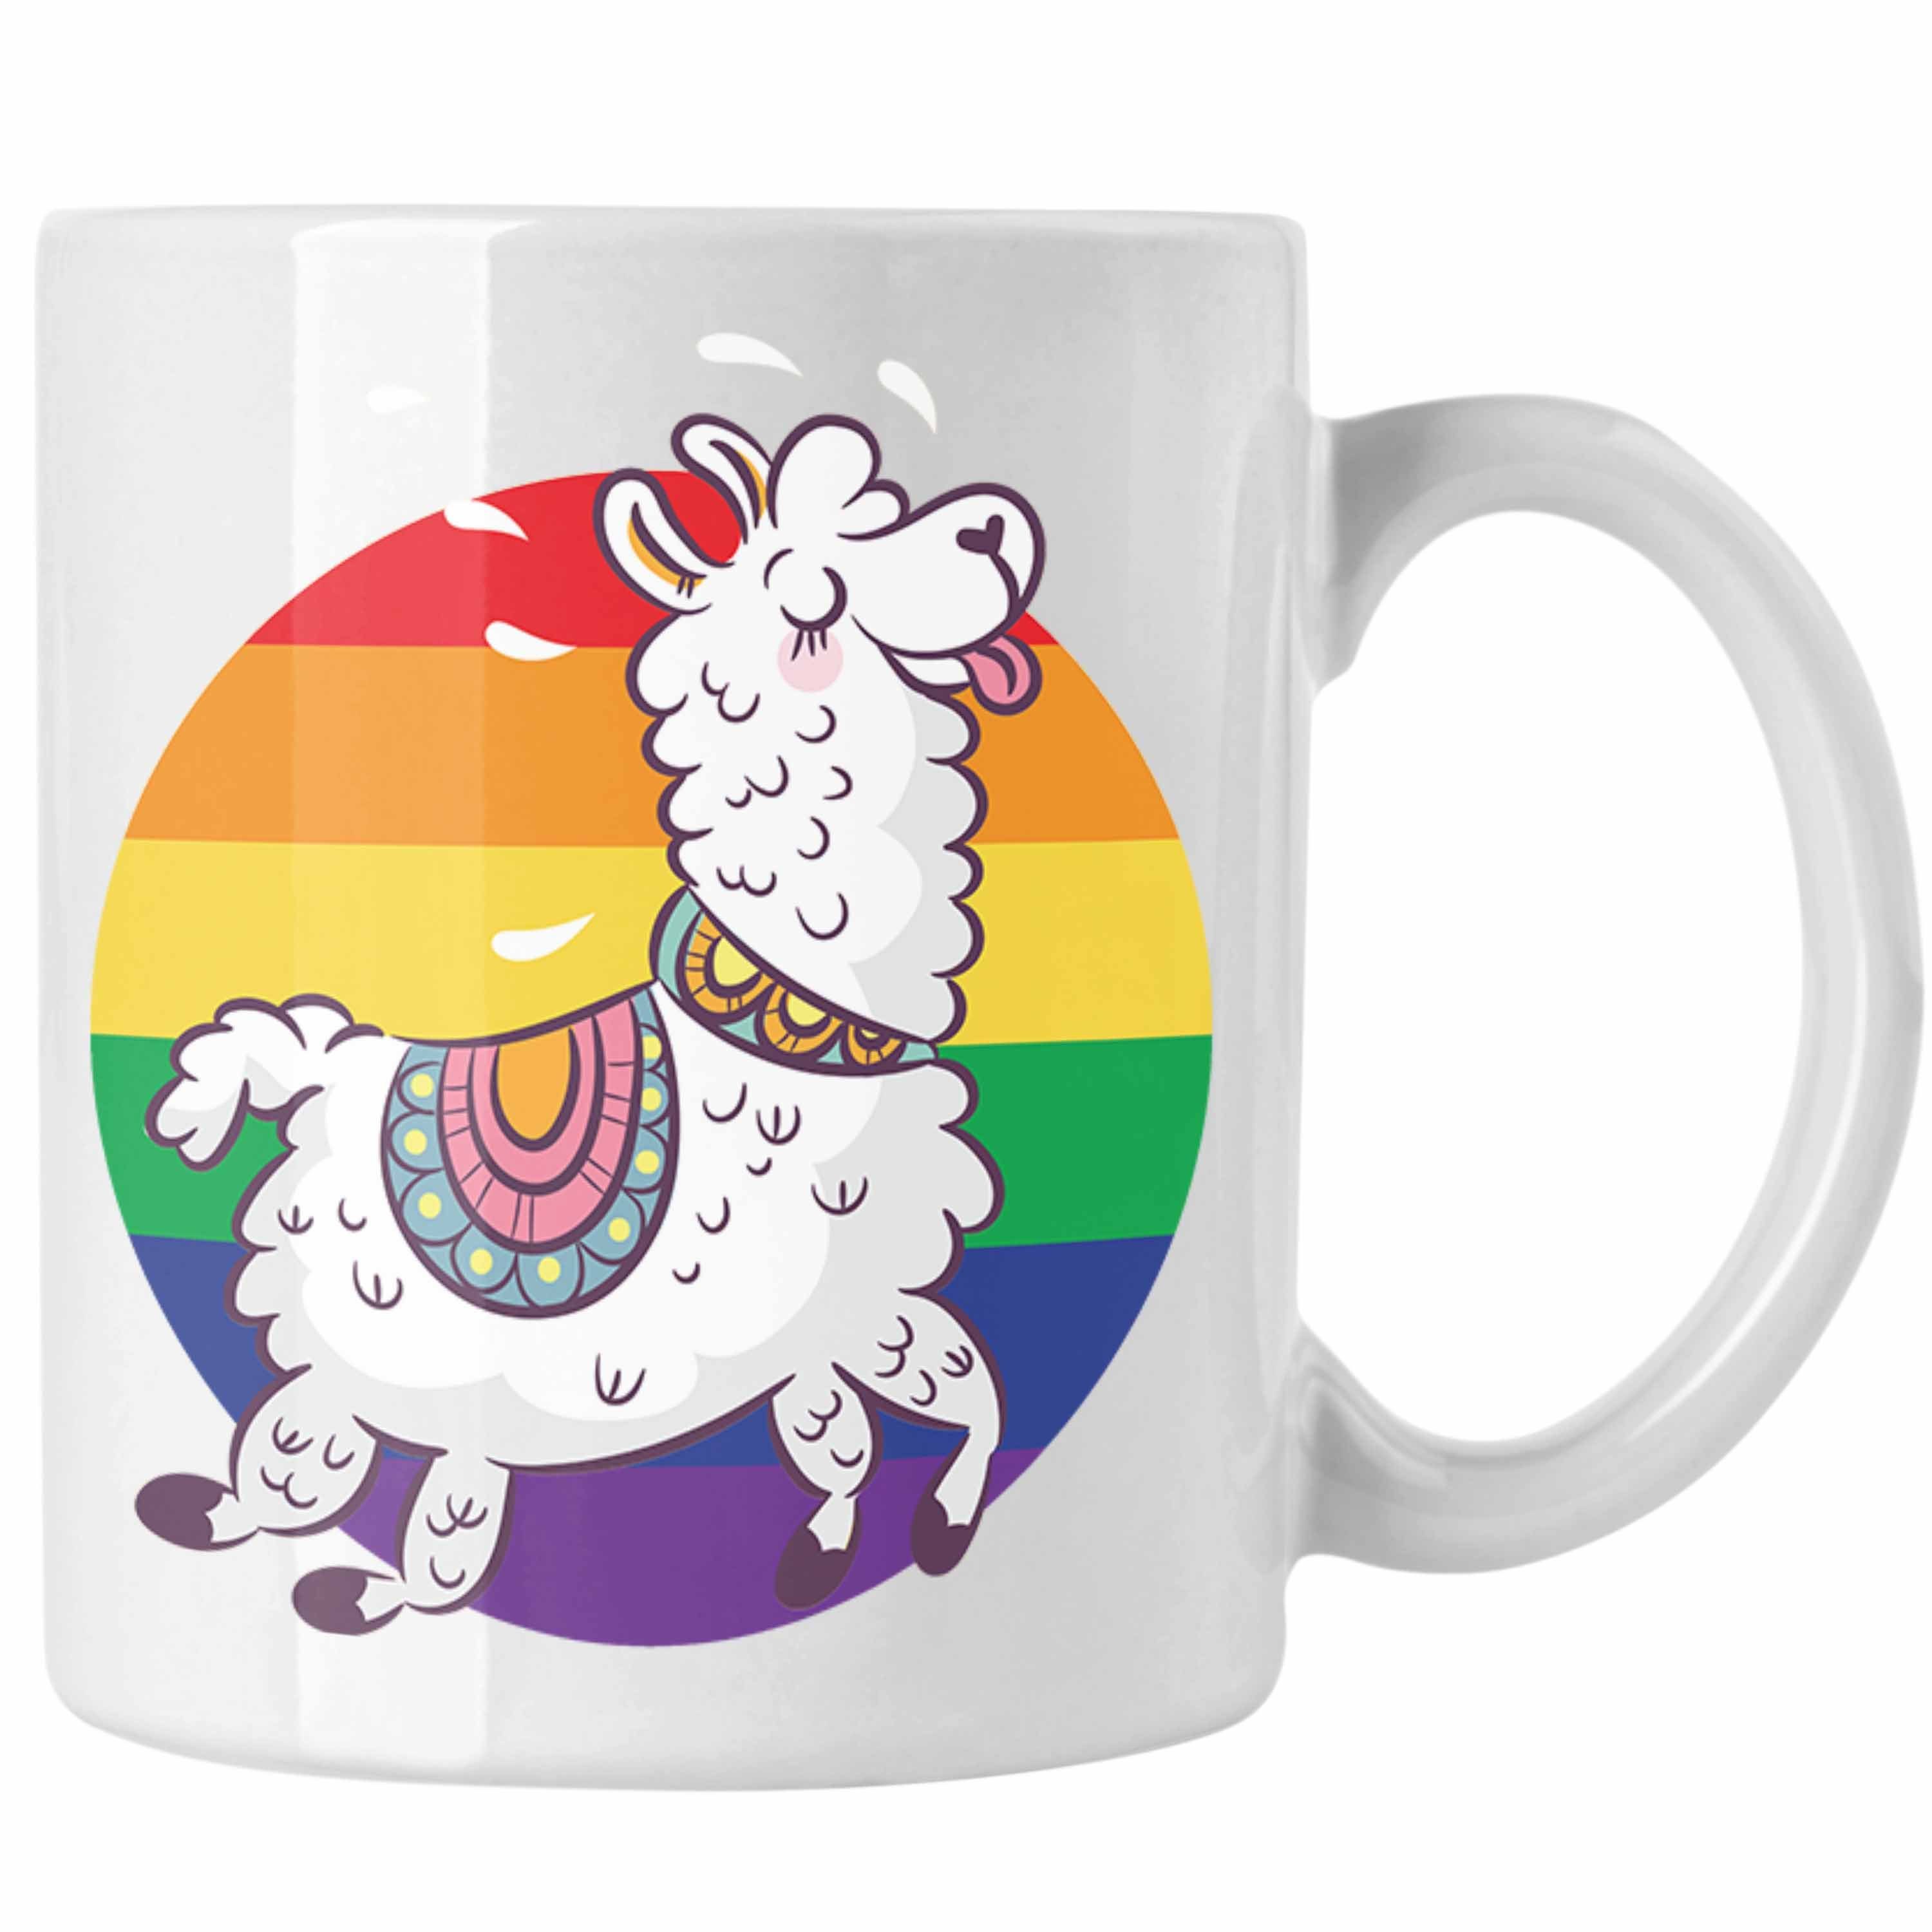 Trendation Tasse Trendation - Regenbogen Tasse Geschenk LGBT Schwule Lesben Transgender Grafik Pride Tolles Llama Weiss